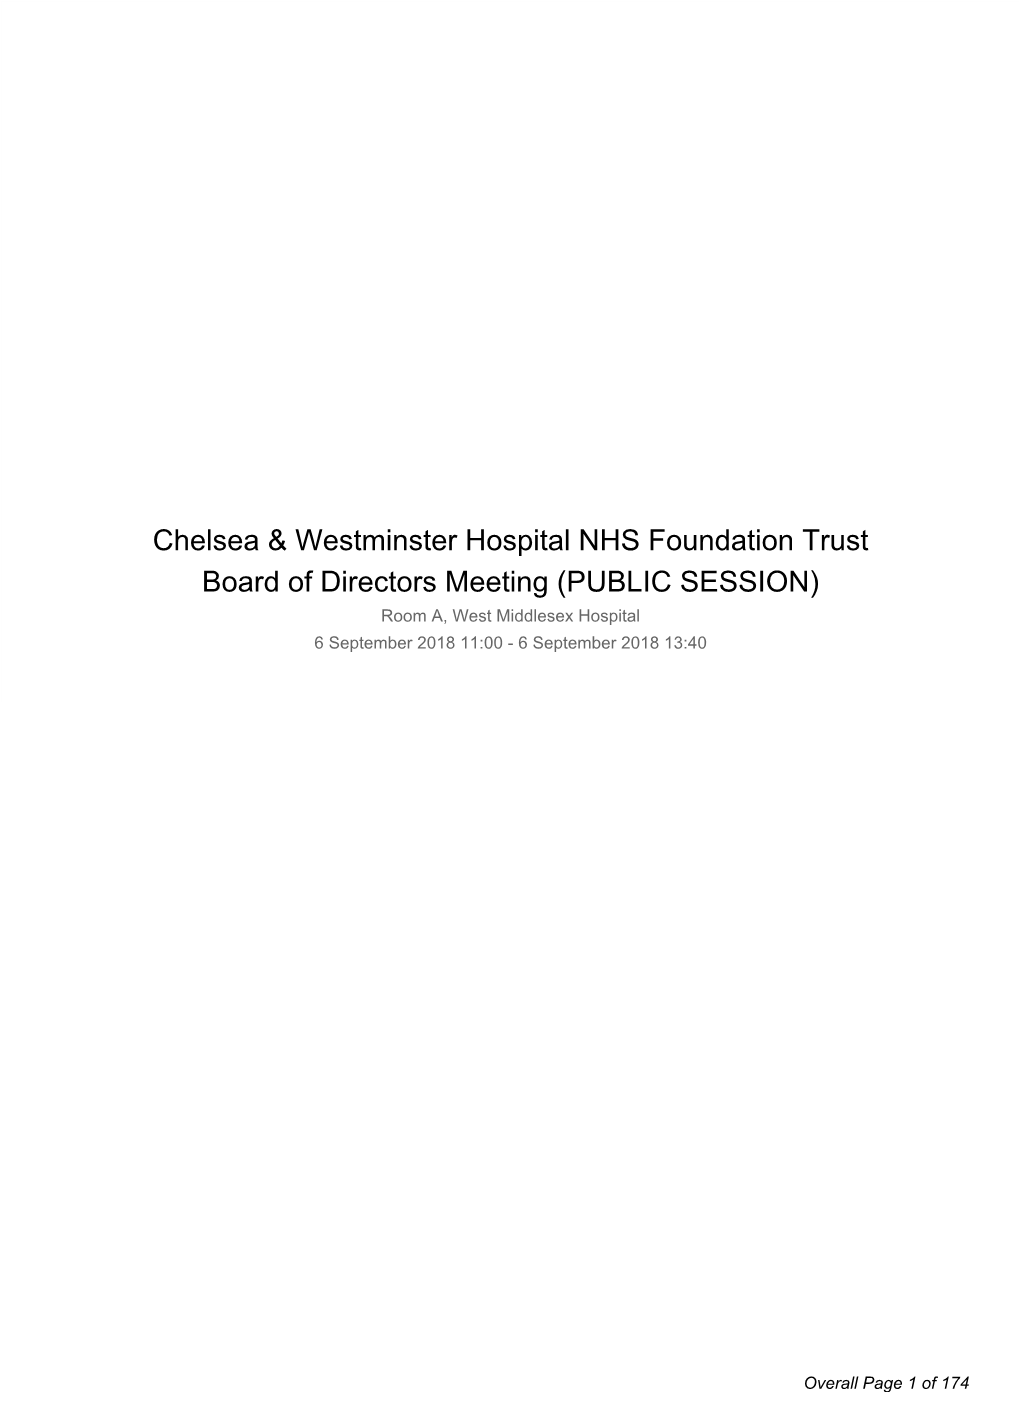 Chelsea & Westminster Hospital NHS Foundation Trust Board of Directors